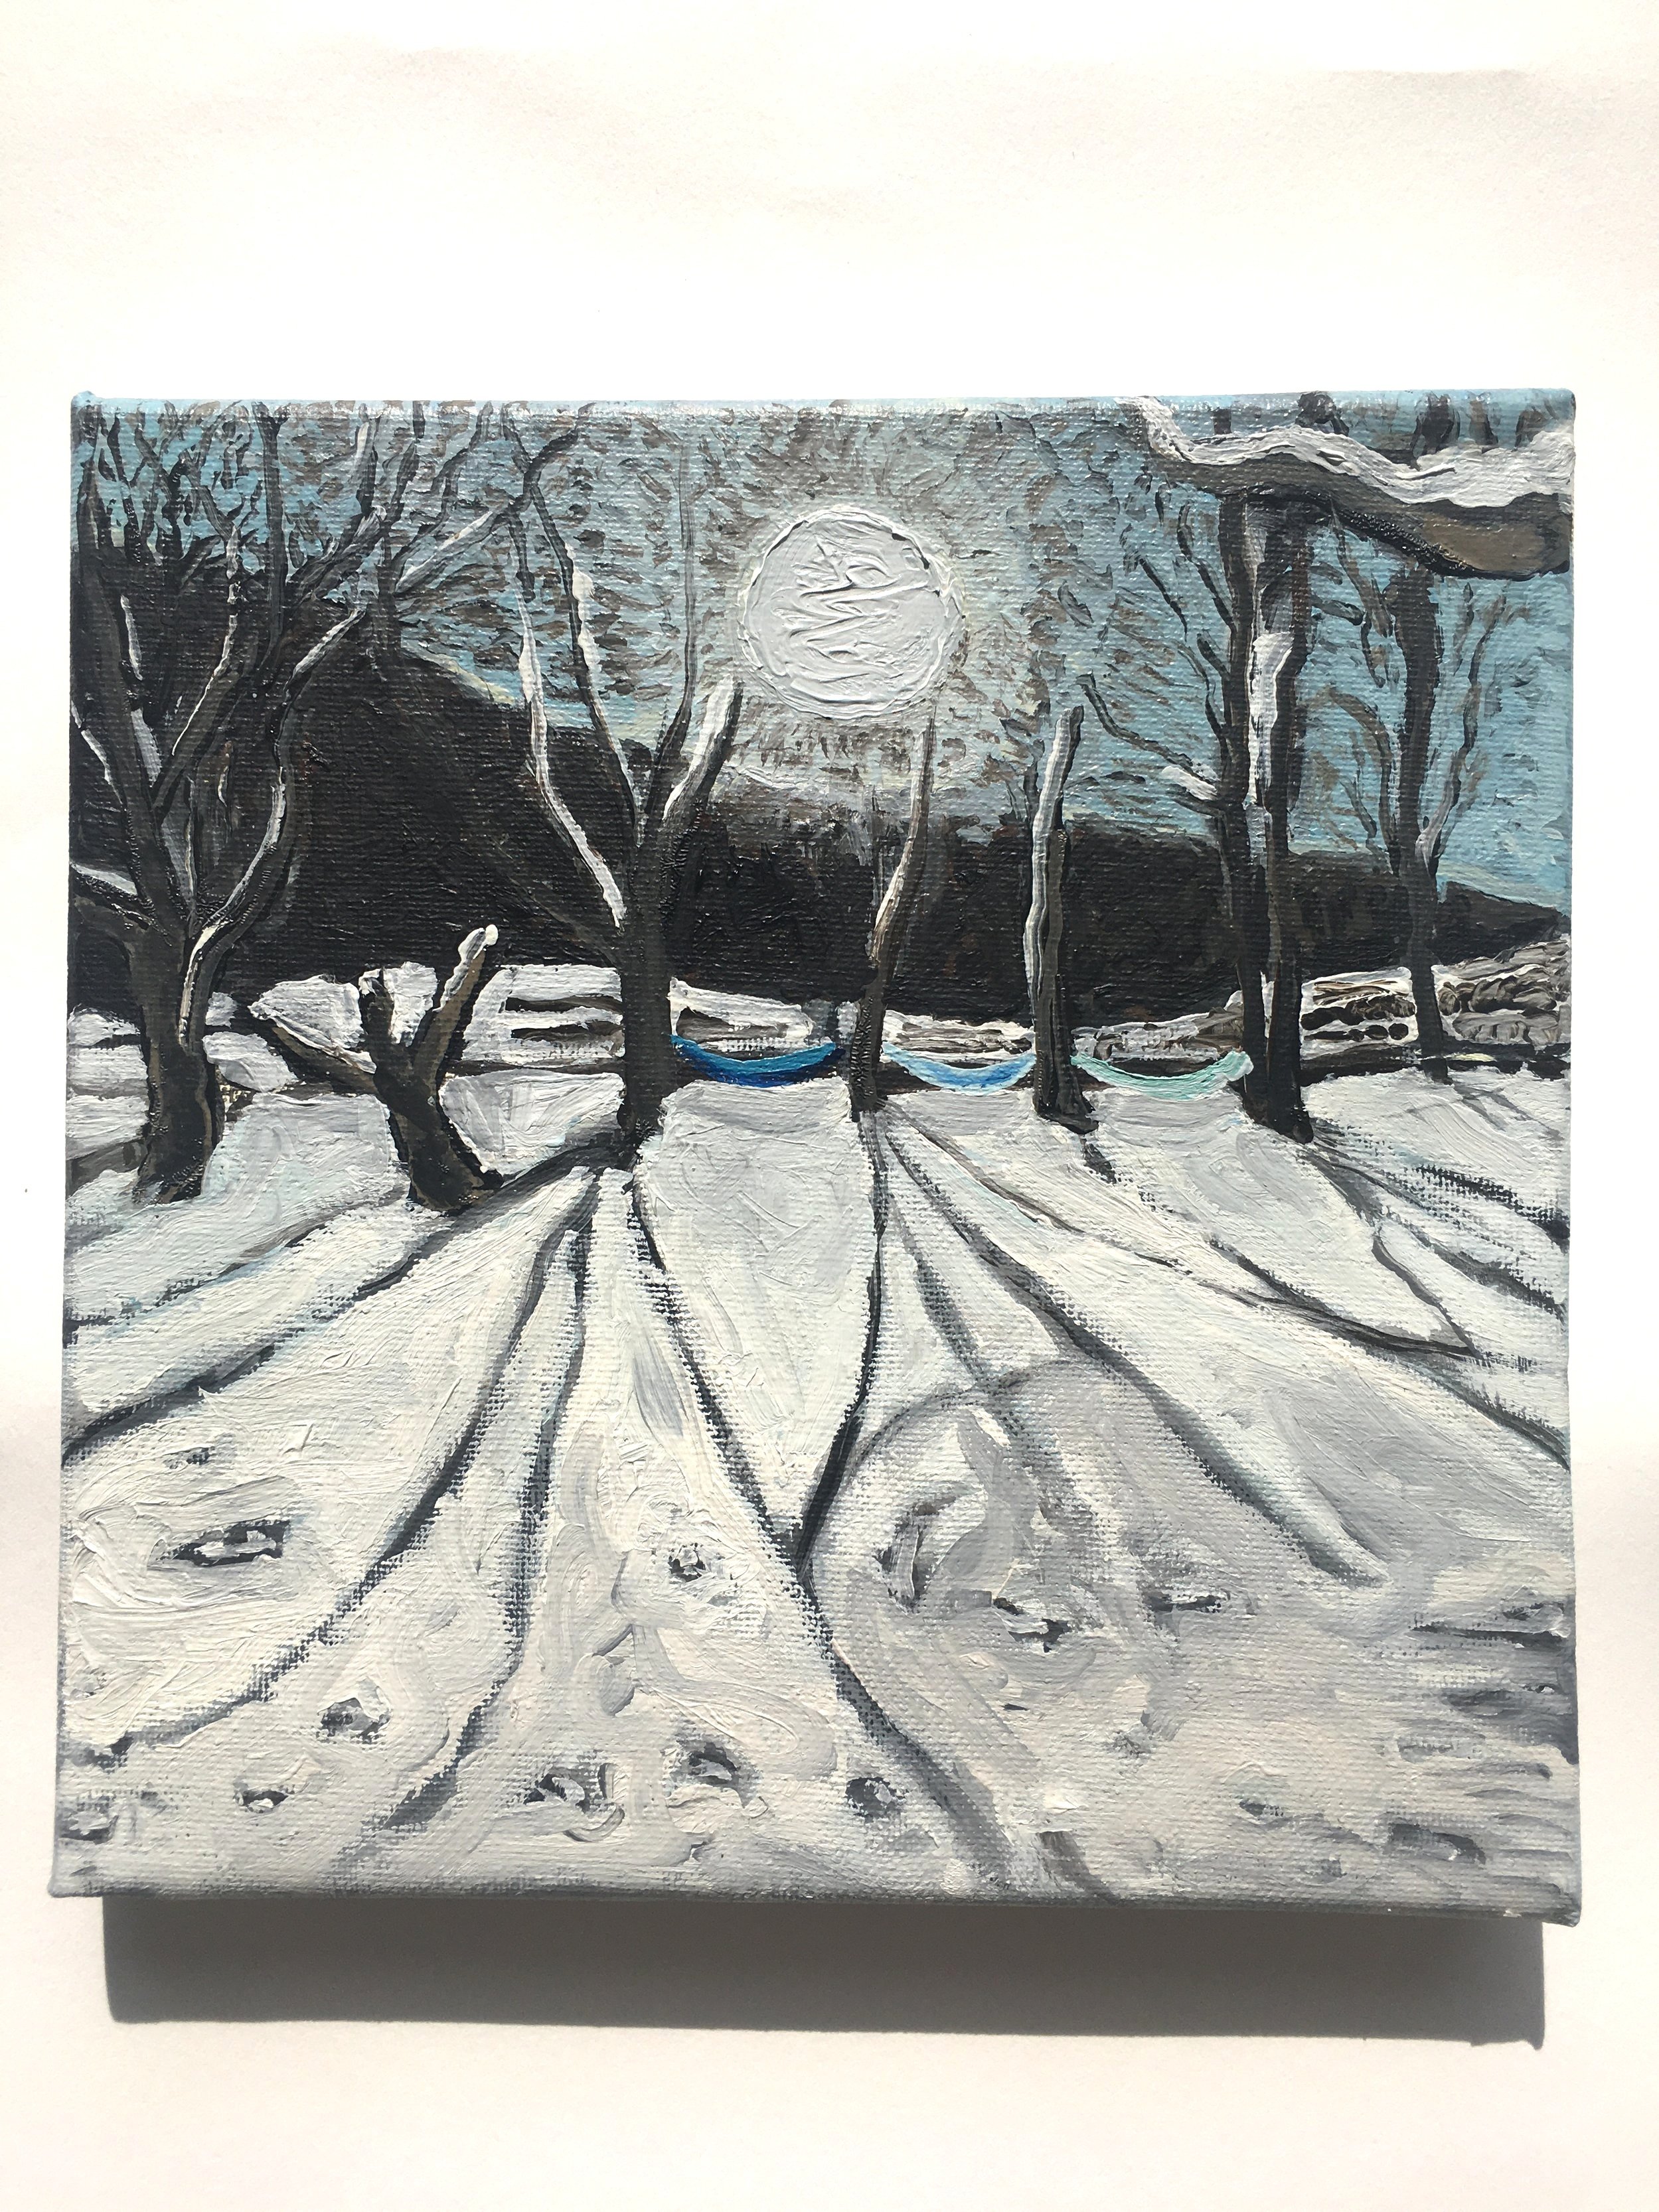   Low Winter Sun,  Oil on Canvas, 8” x 8”, 2021 